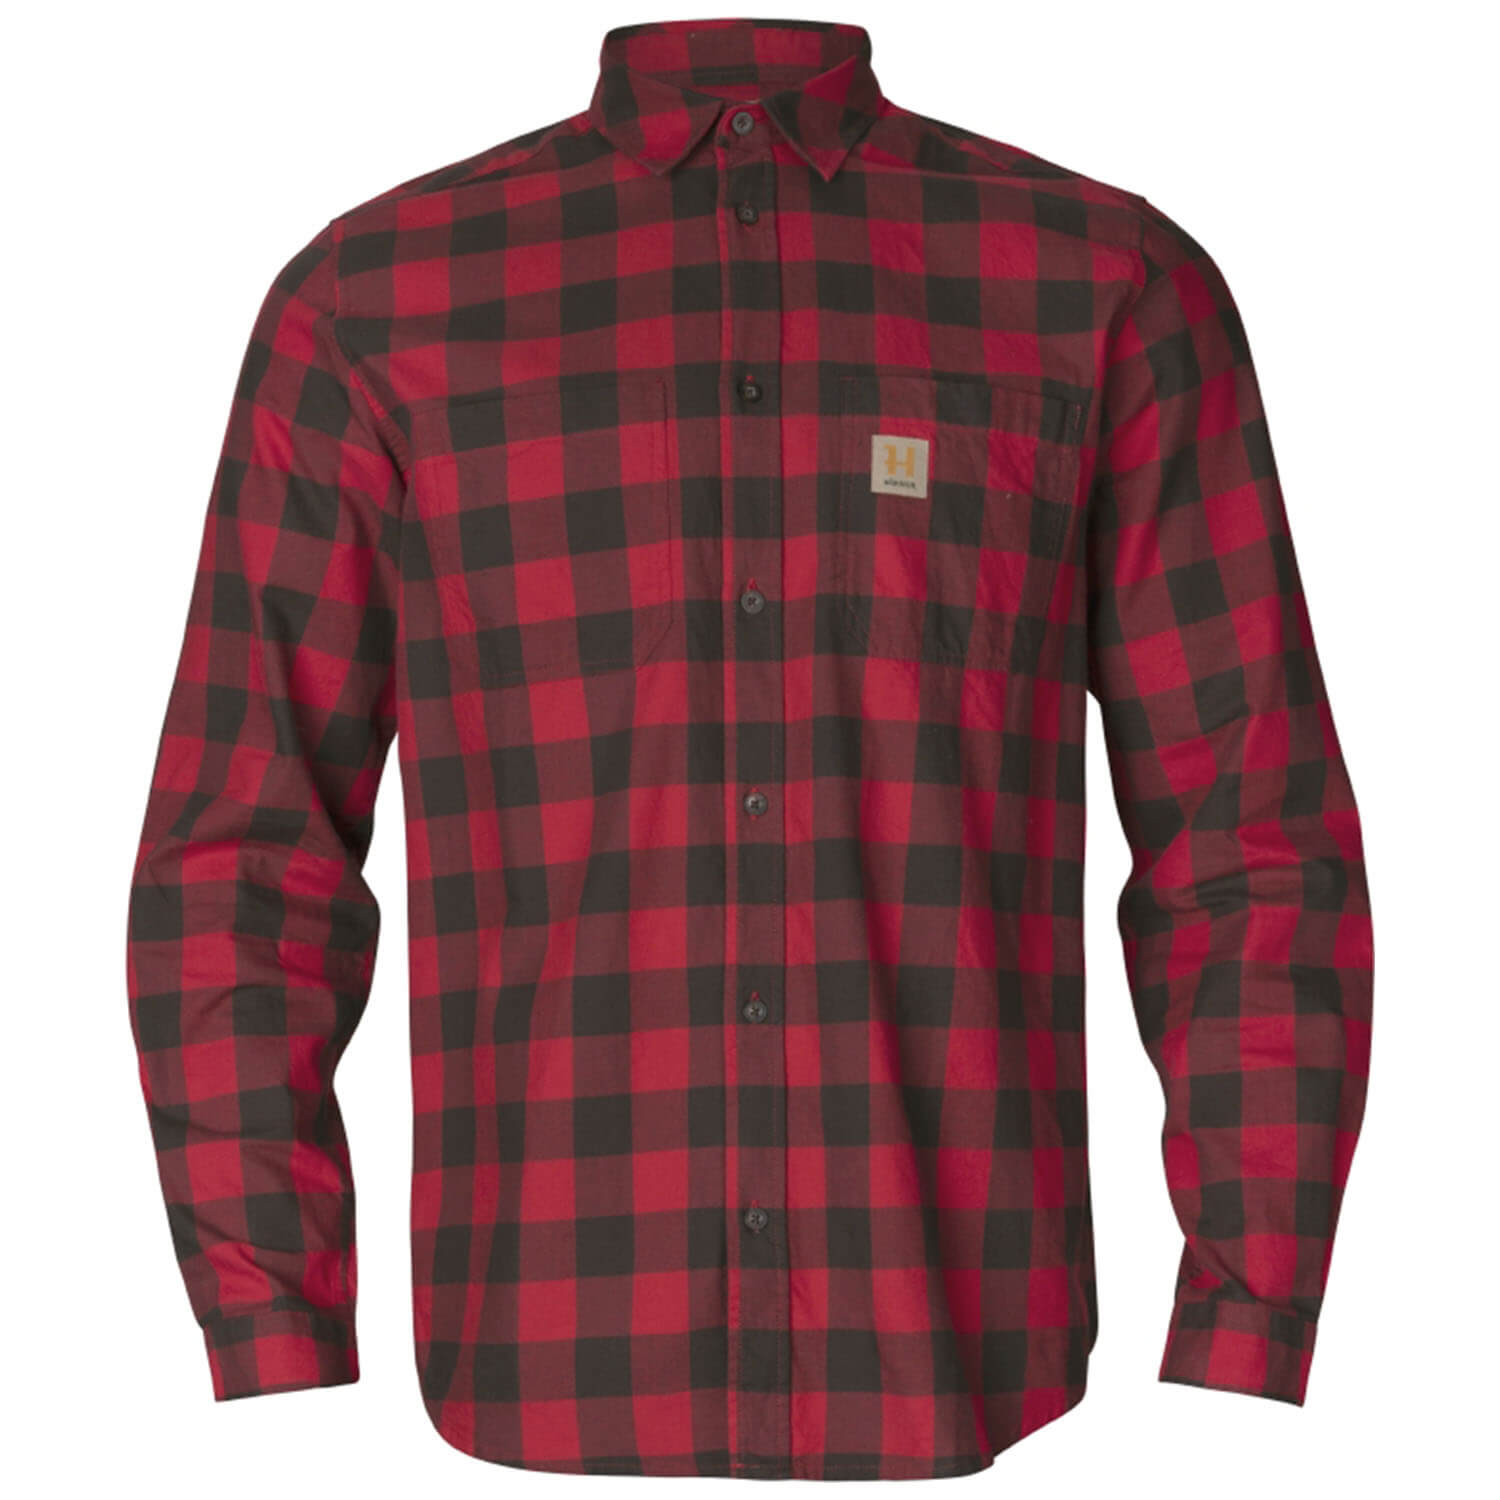  Härkila Jachthemd Scandinavisch (Rood Ruitje) - Overhemden